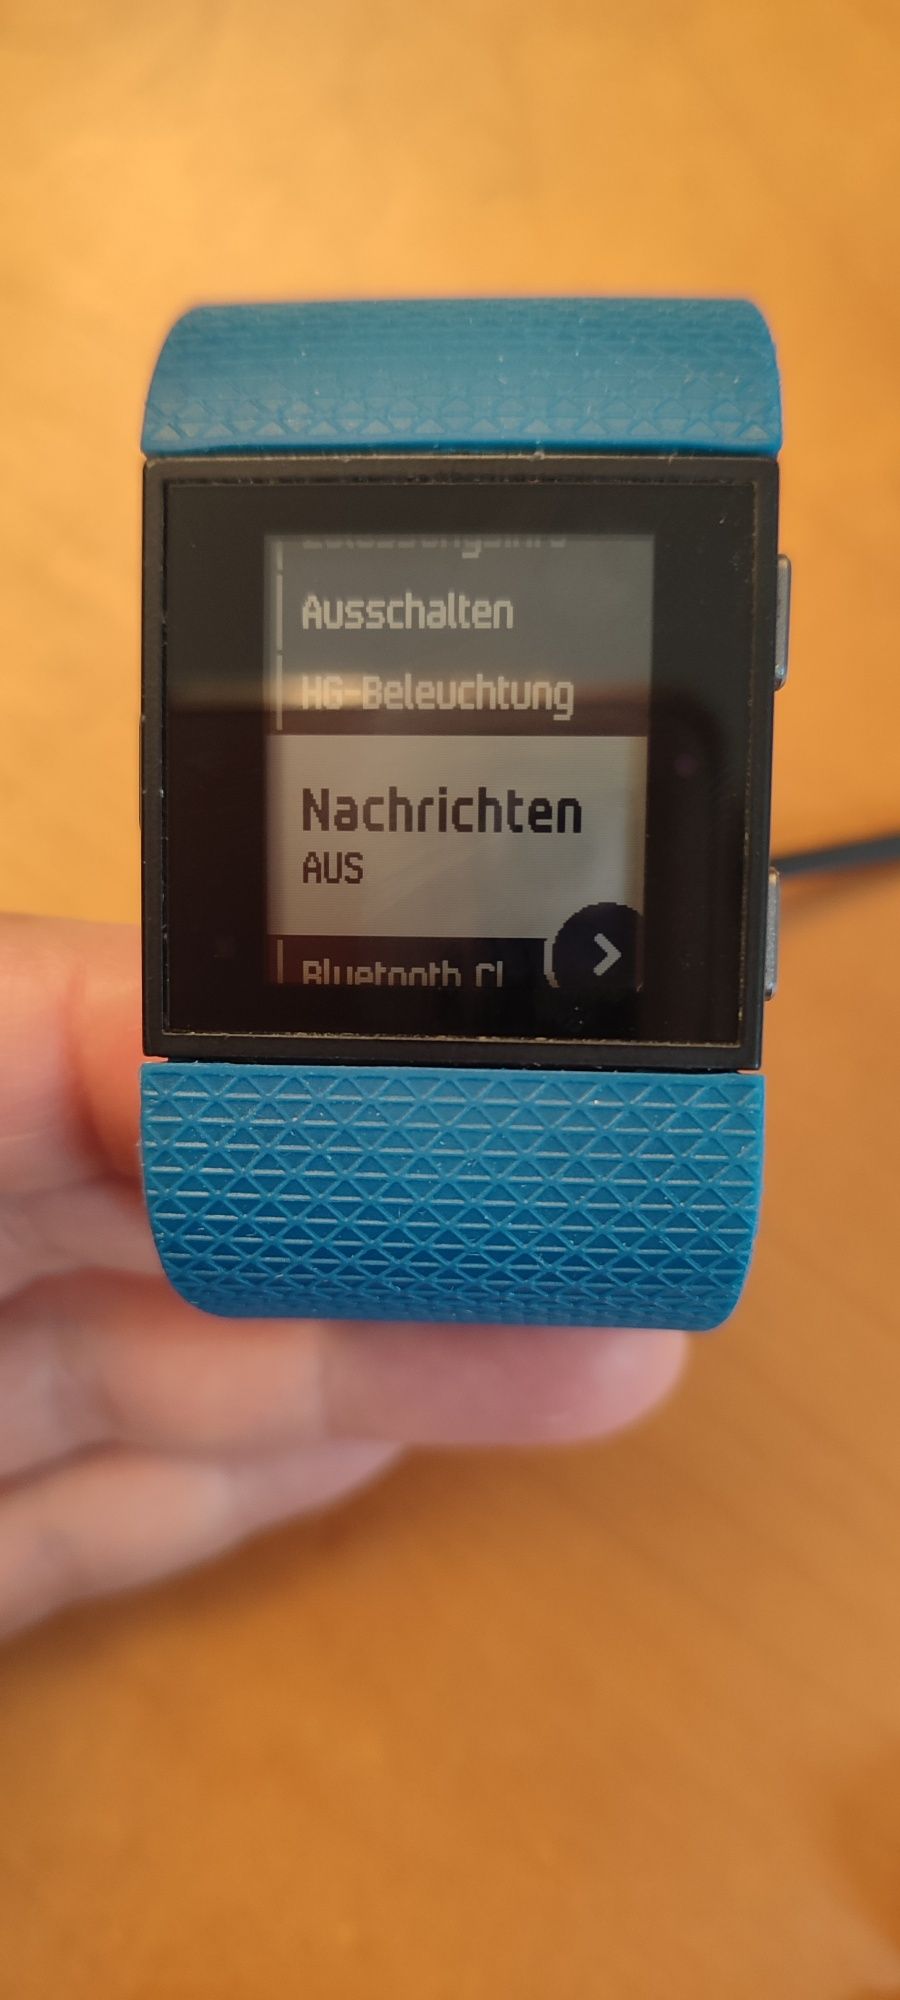 Fitbit Surge zegarek sportowy Ekran dotykowy Bluetooth